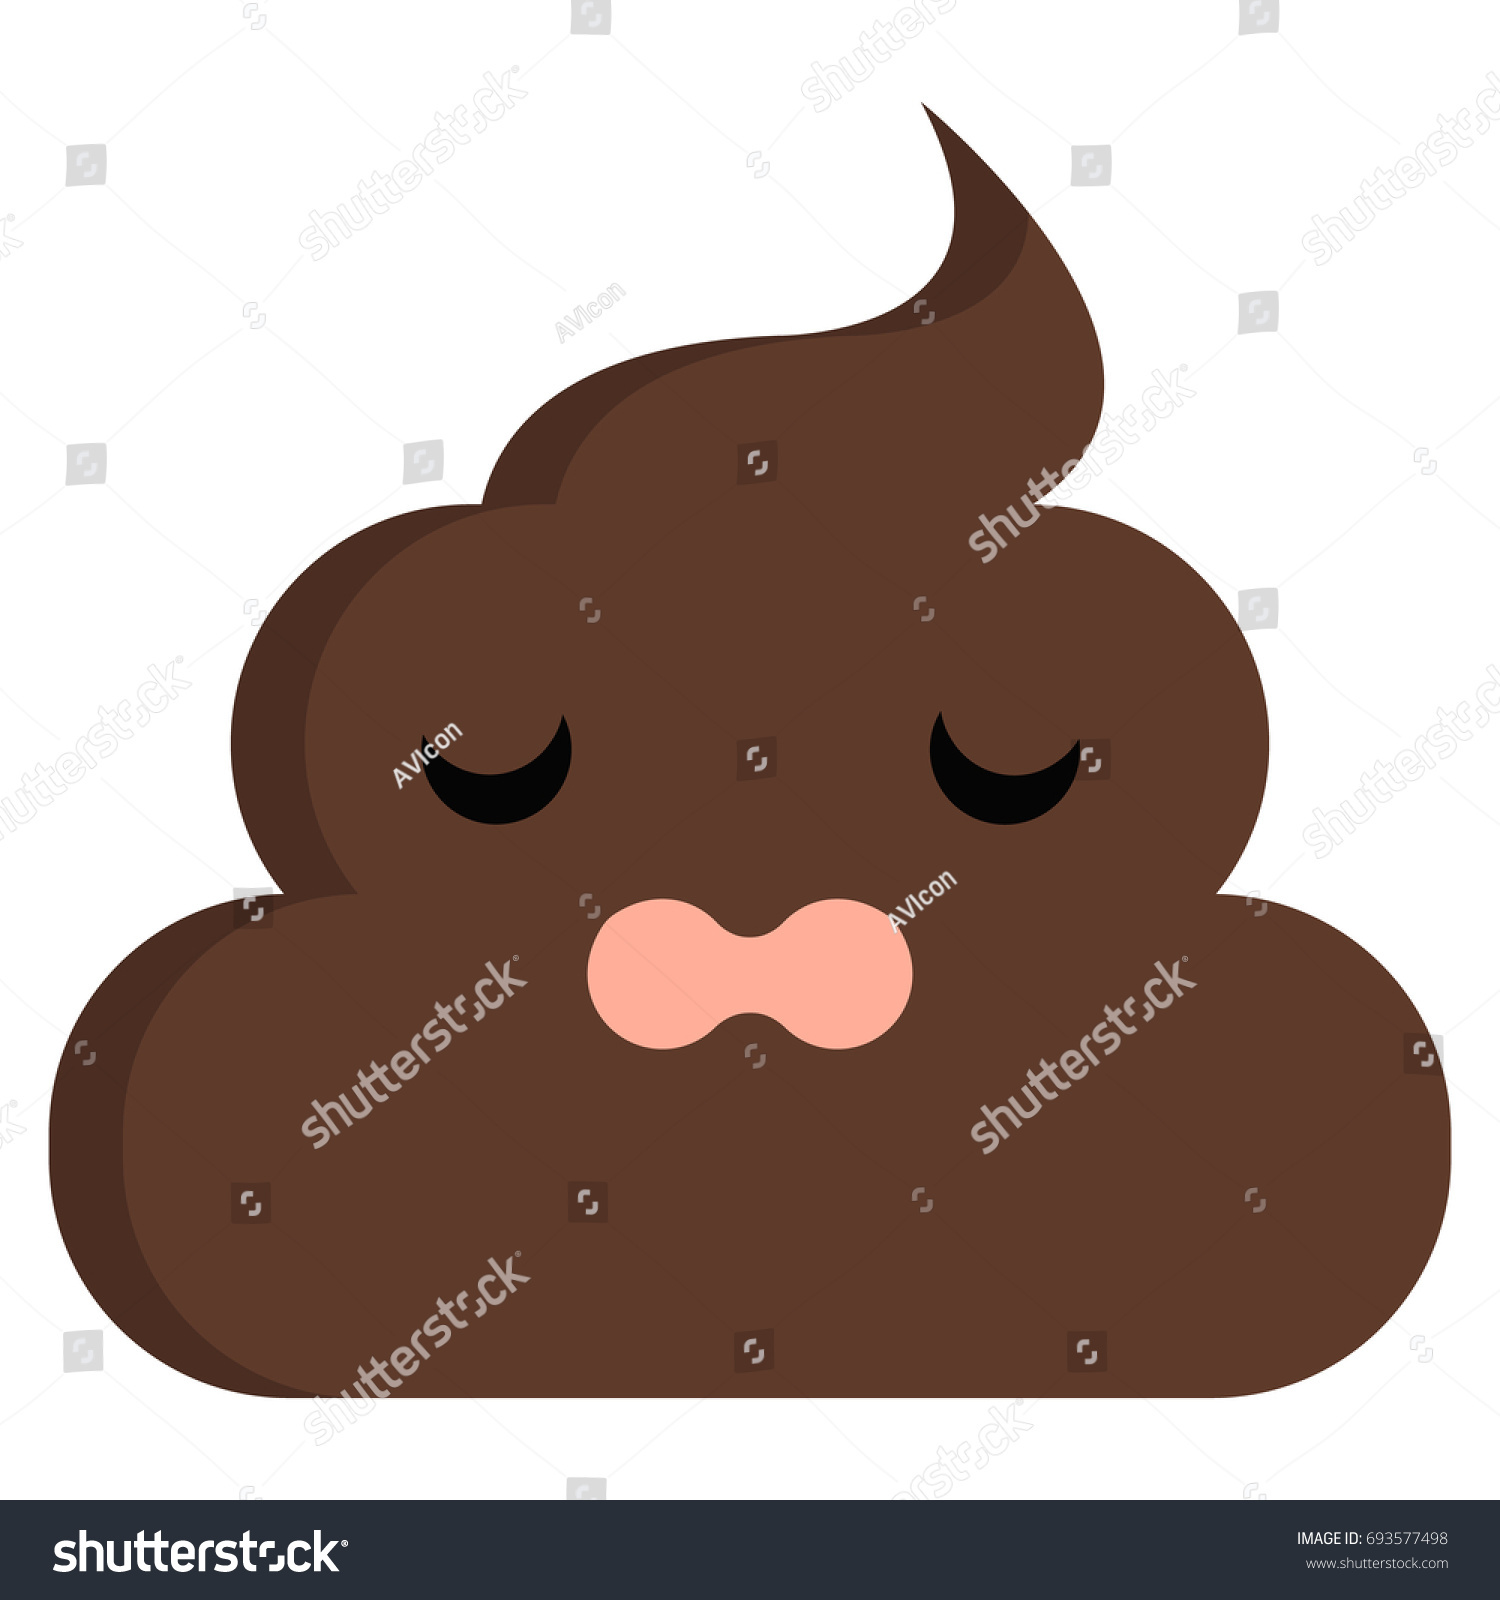 Weary Face Stinky Poop Shit Emoji Arkivvektor (royaltyfri) 693577498.